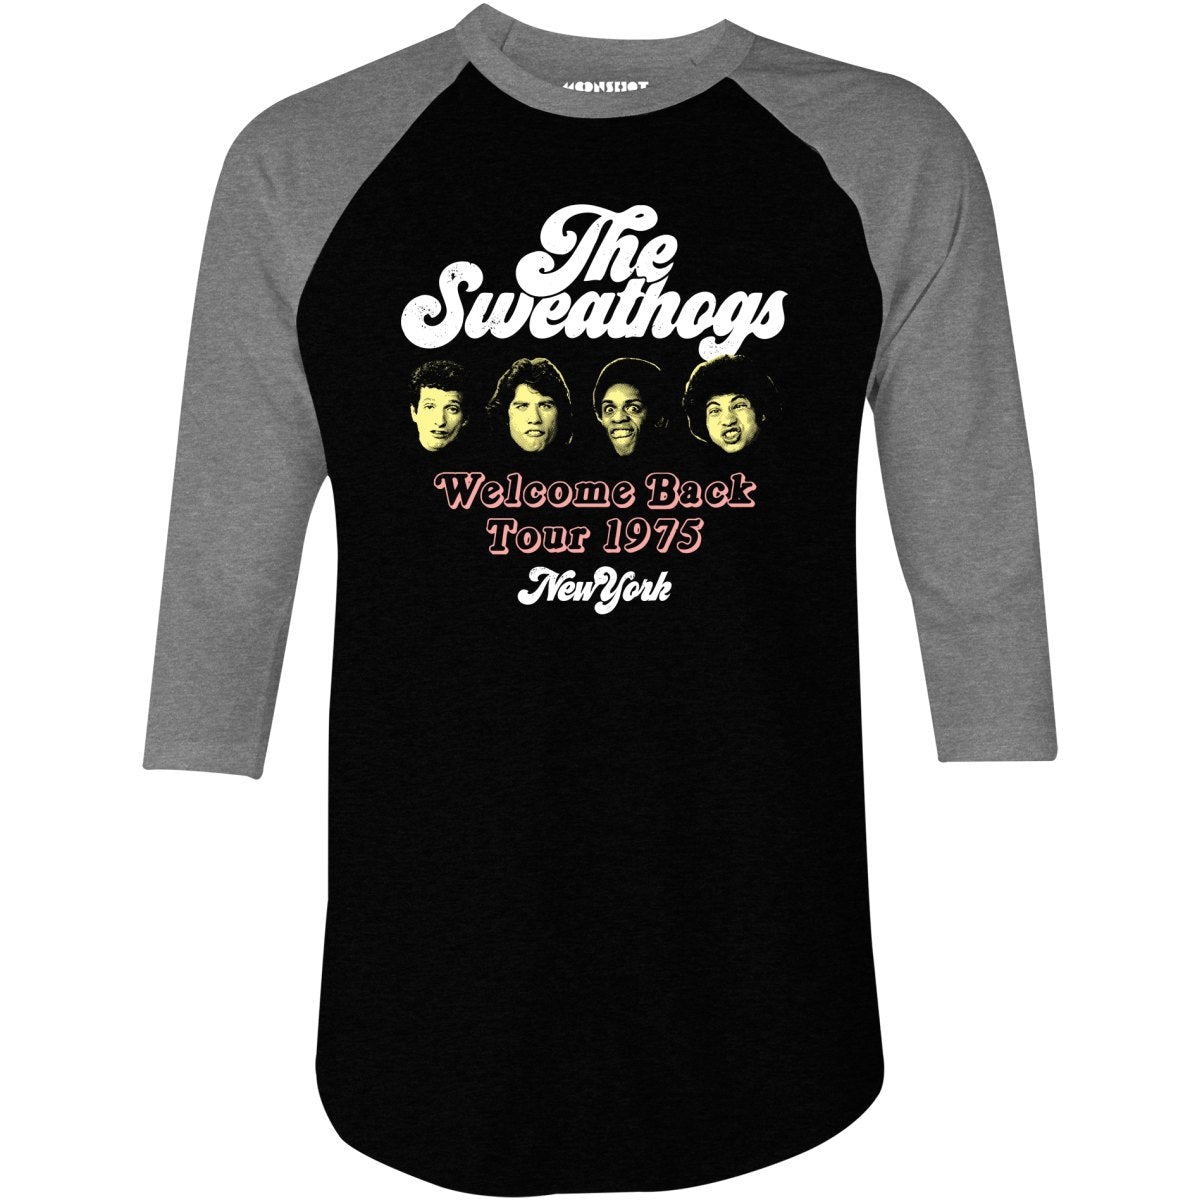 The Sweathogs - 3/4 Sleeve Raglan T-Shirt